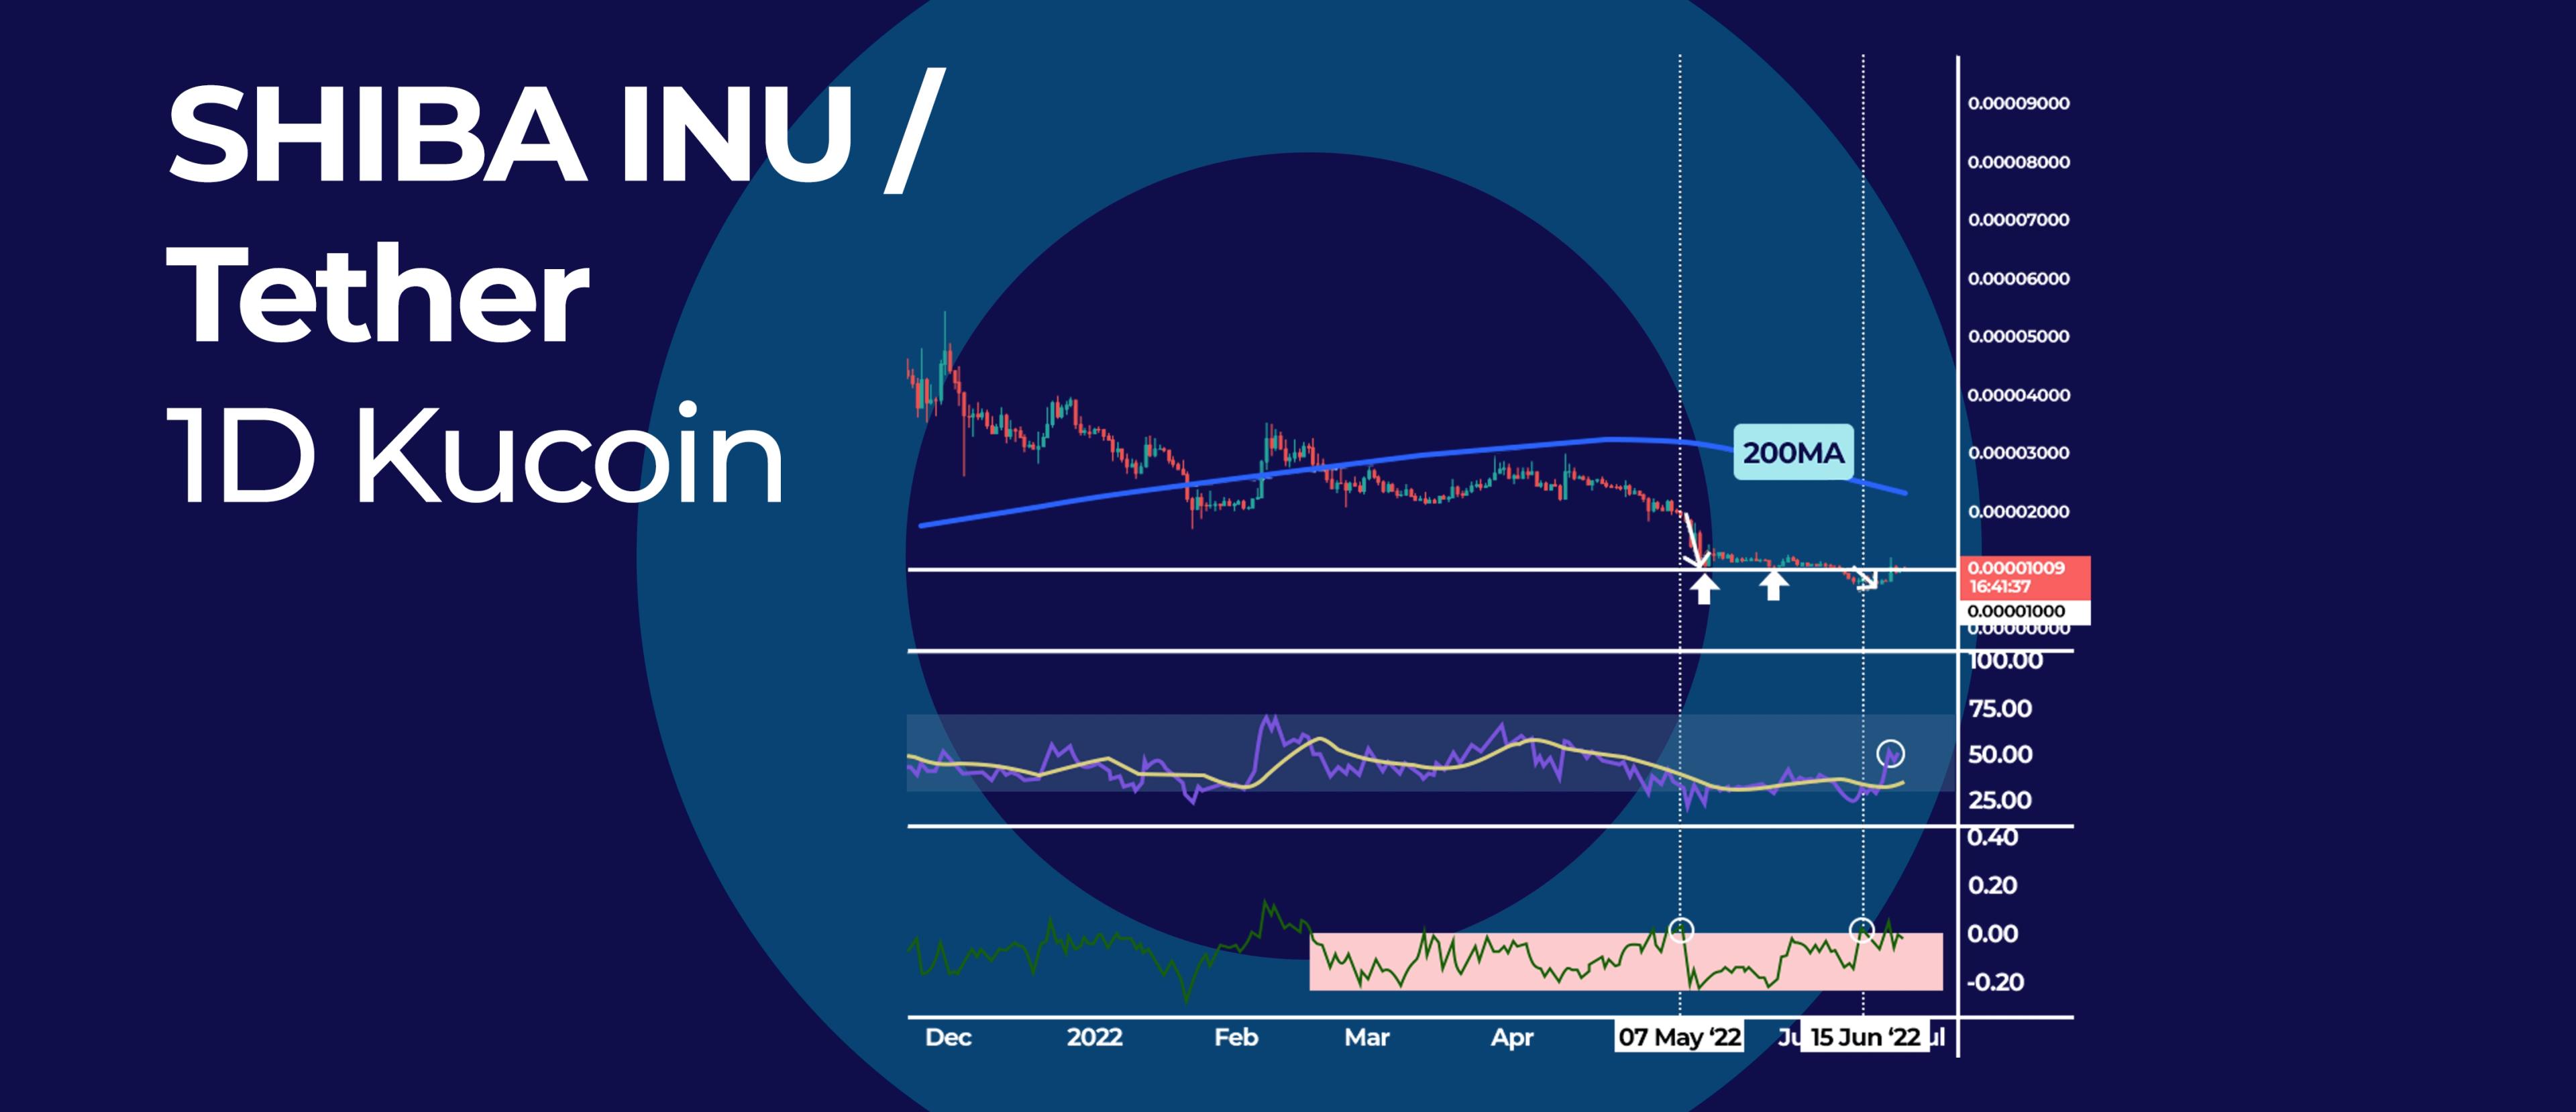 The Chaikin Money Flow Indicator Reveals Shiba Inu Has Low Accumulation